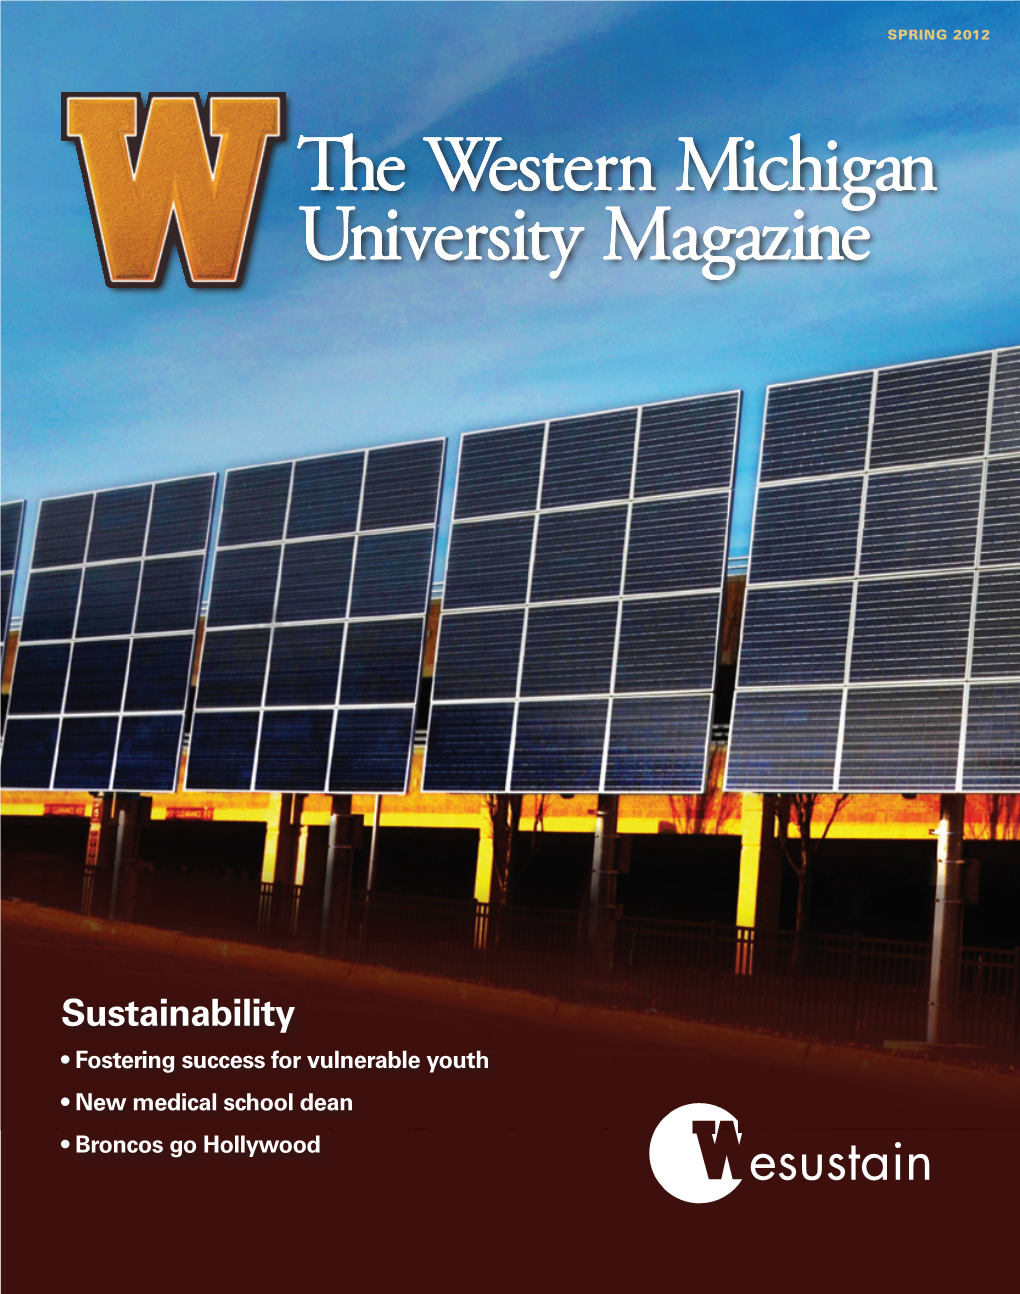 The Western Michigan University Magazine, Spring 2012